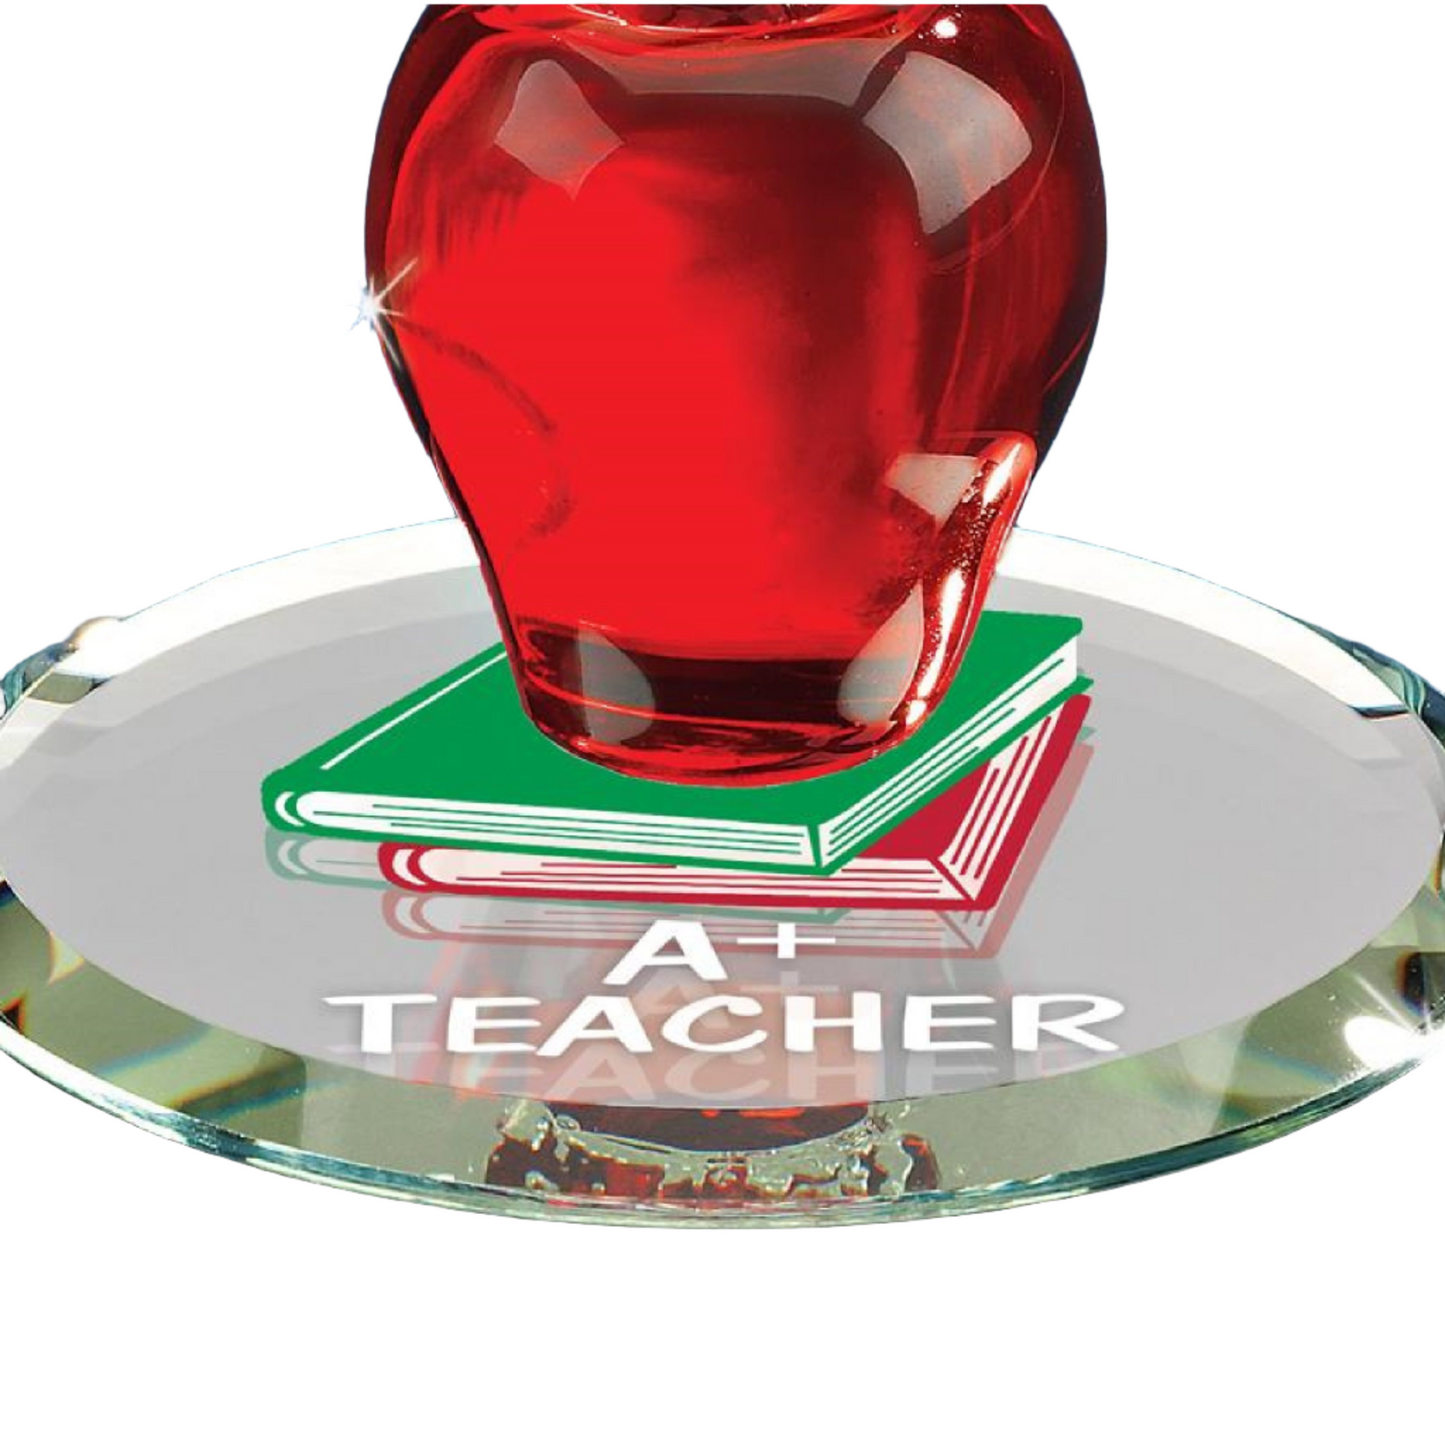 Glass Baron A+ Teacher Figurine